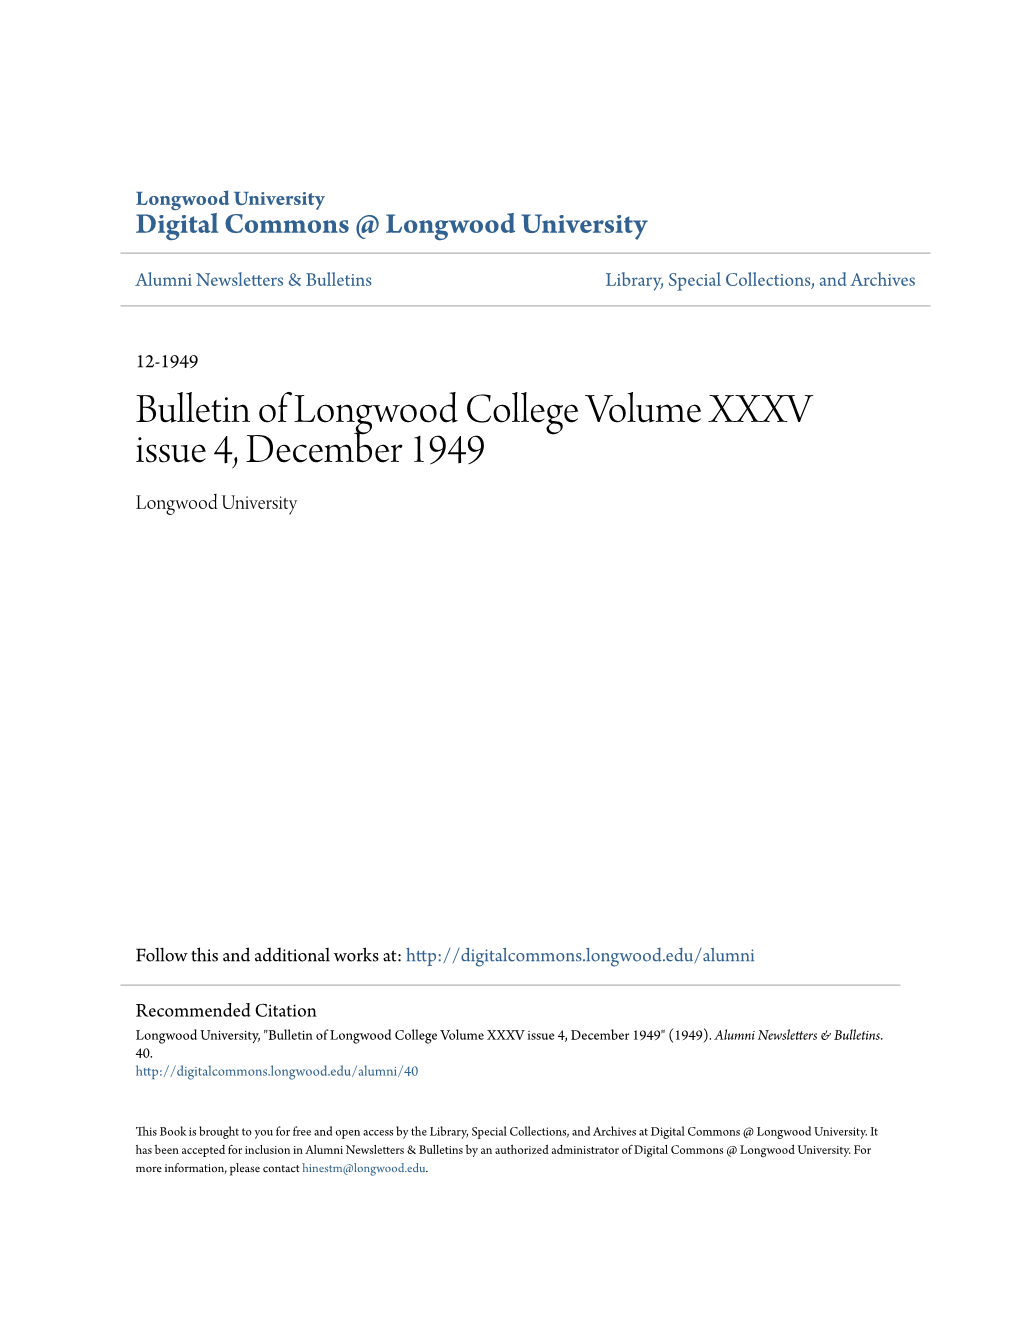 Bulletin of Longwood College Volume XXXV Issue 4, December 1949 Longwood University